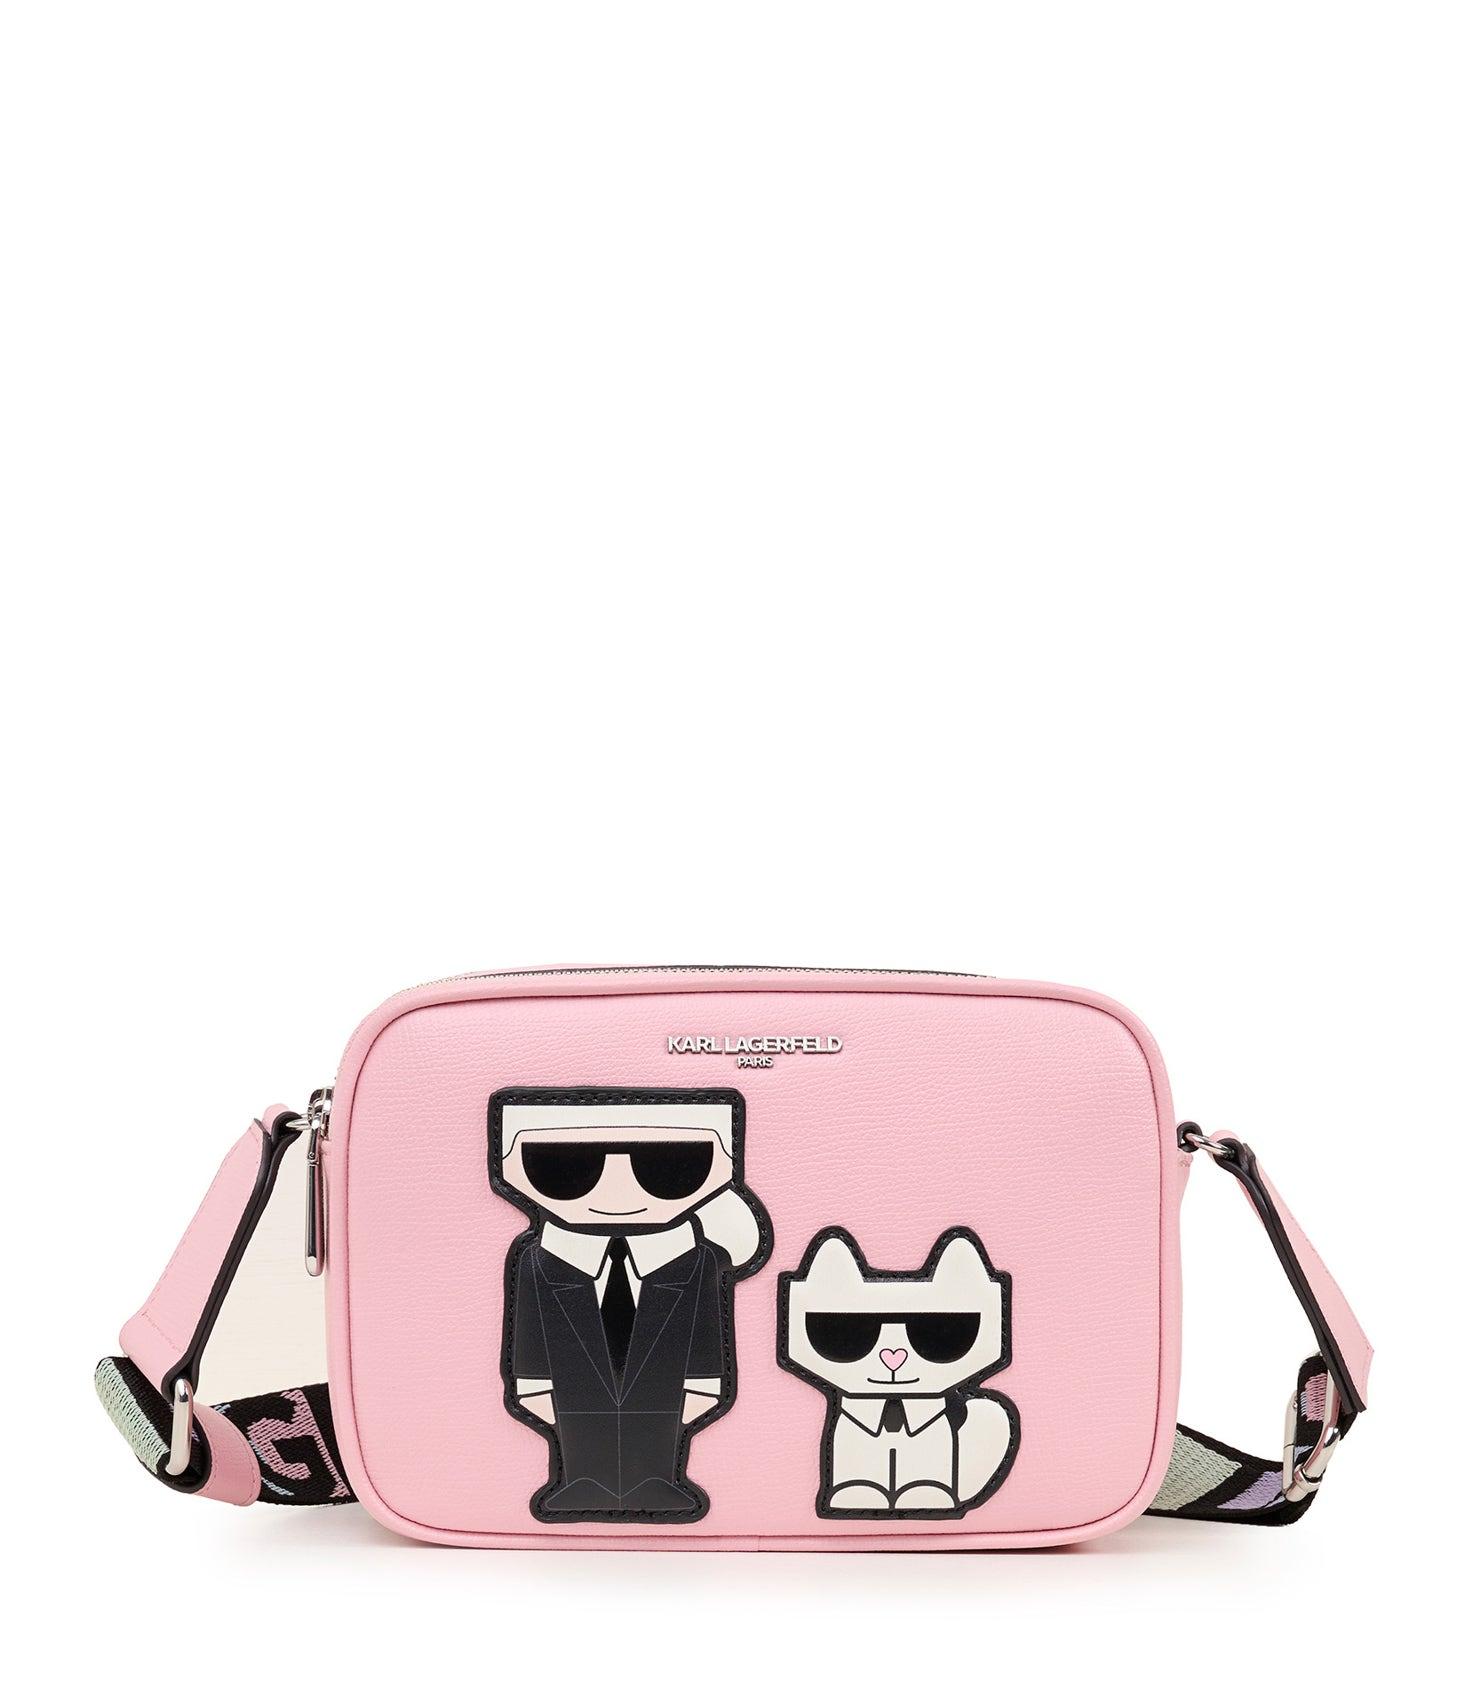 Karl Lagerfeld | Women's Maybelle Camera Crossbody Bag | Powder Blush Pink  | Size | Lyst